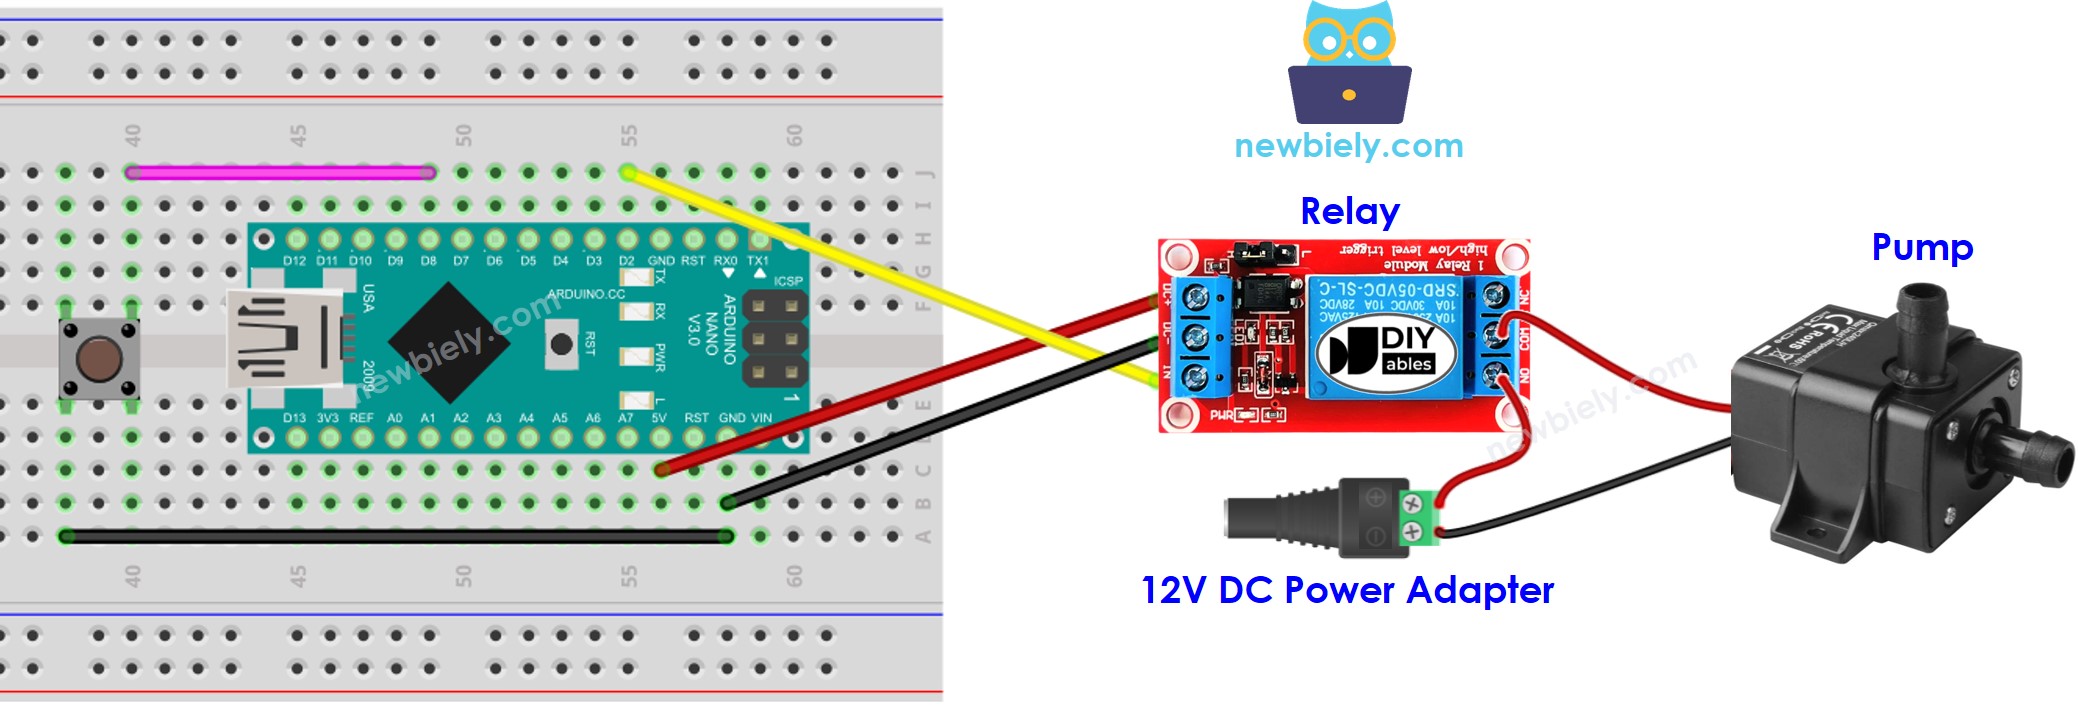 The wiring diagram between Arduino Nano and Button controls Pump